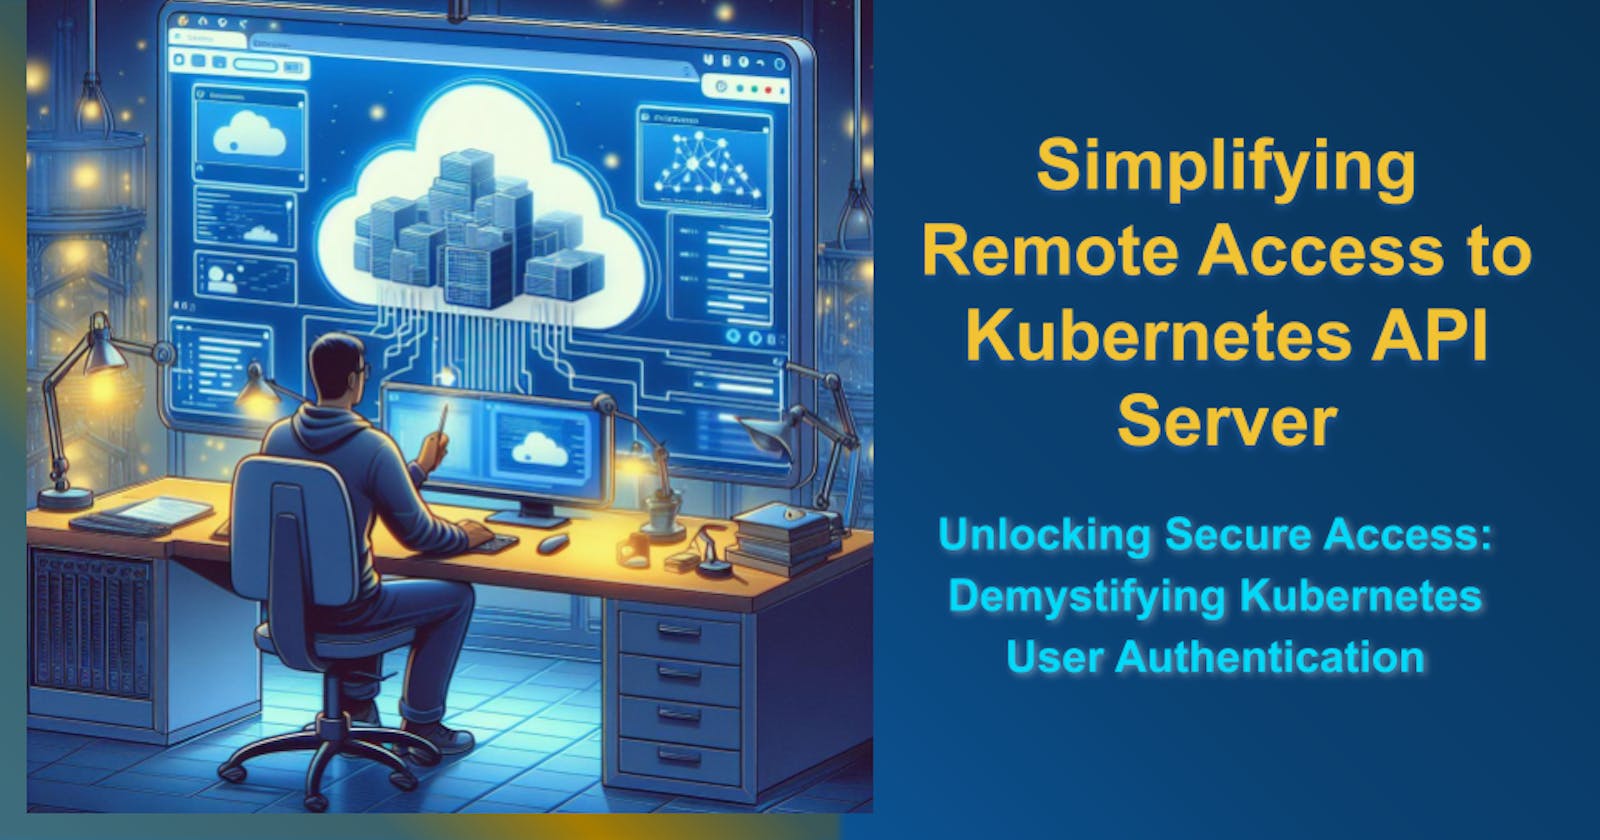 Simplifying Remote Access to Kubernetes API Server